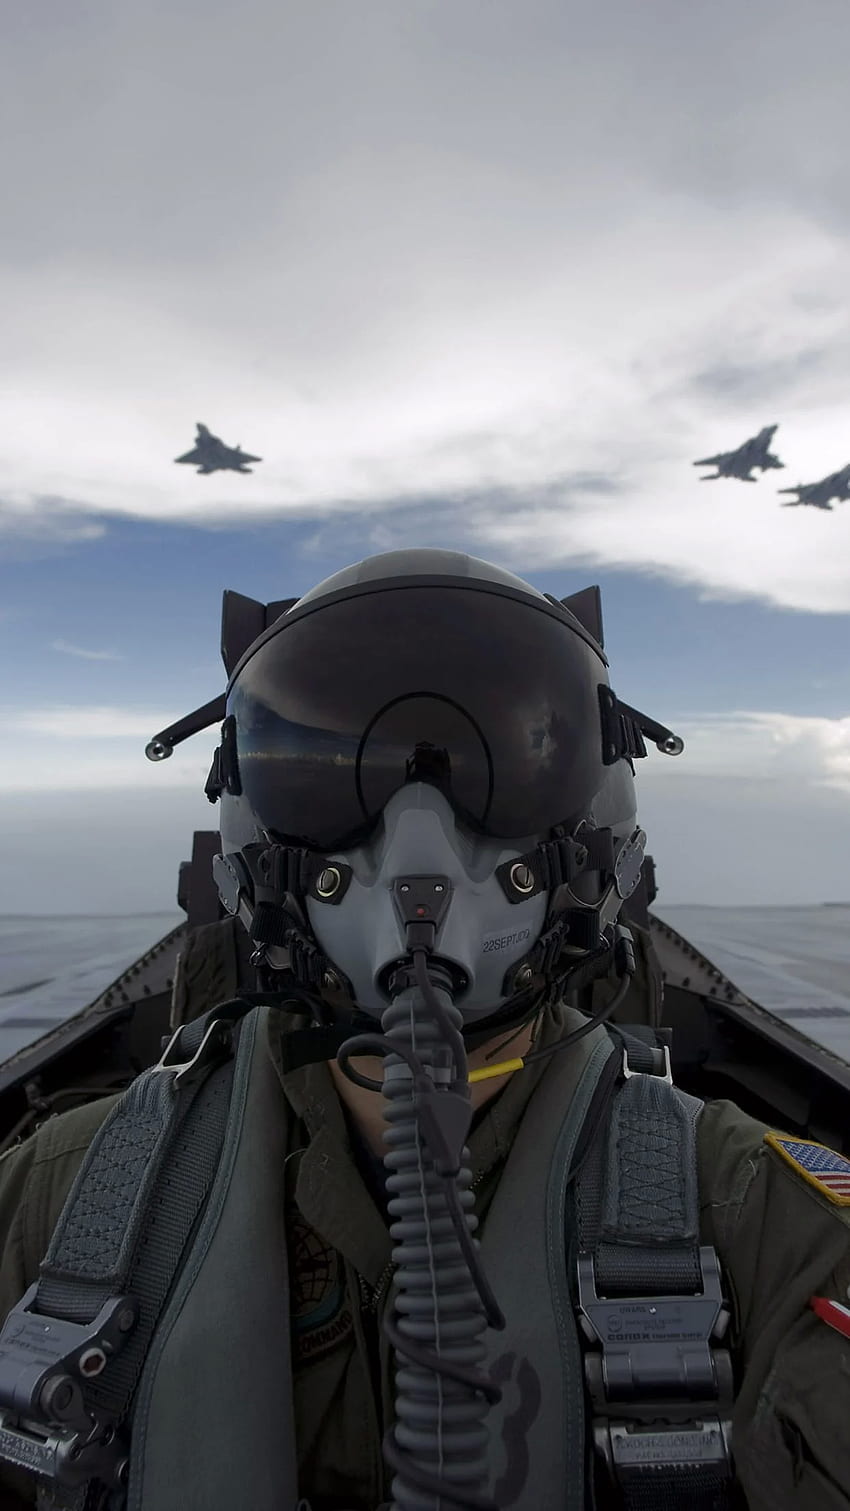 Piloto . Piloto Imperial, Piloto e Piloto de Tie Fighter, Piloto de Caça da Força Aérea Papel de parede de celular HD